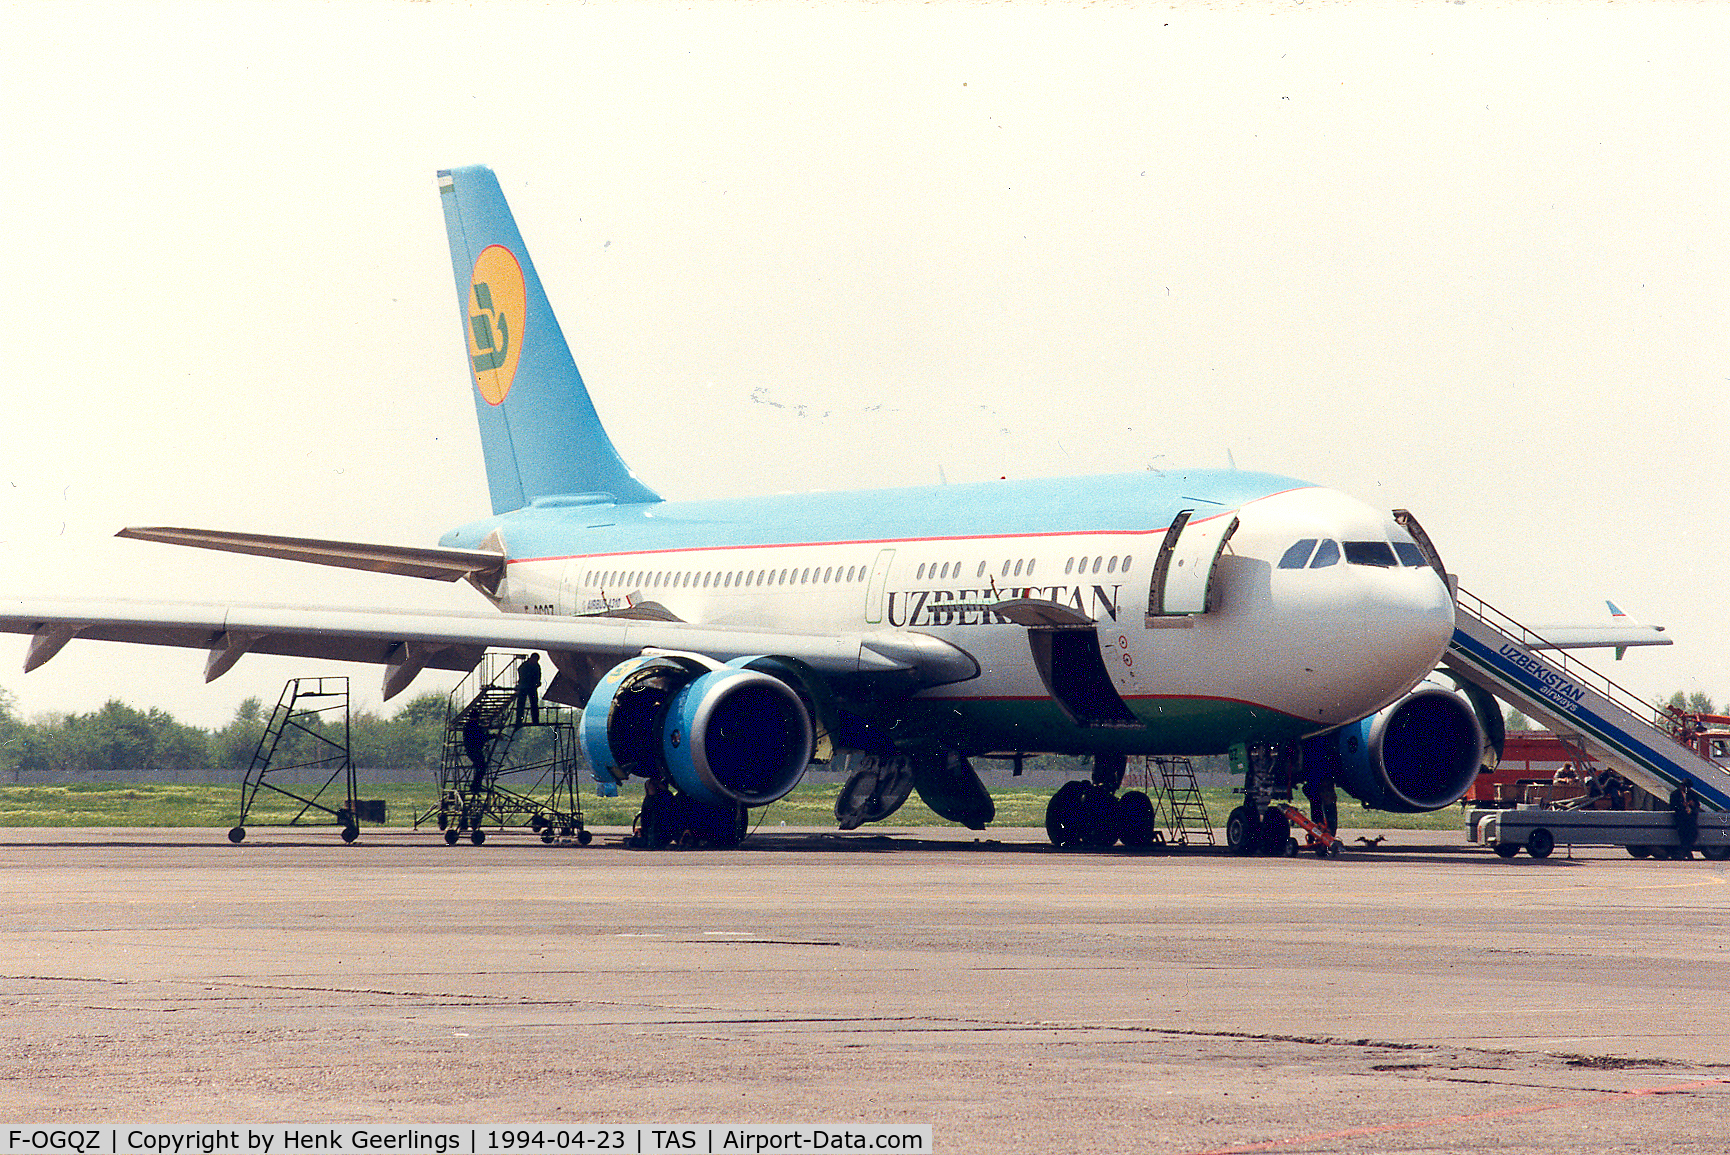 F-OGQZ, 1991 Airbus A310-324 C/N 576, Uzbekistan Airlines